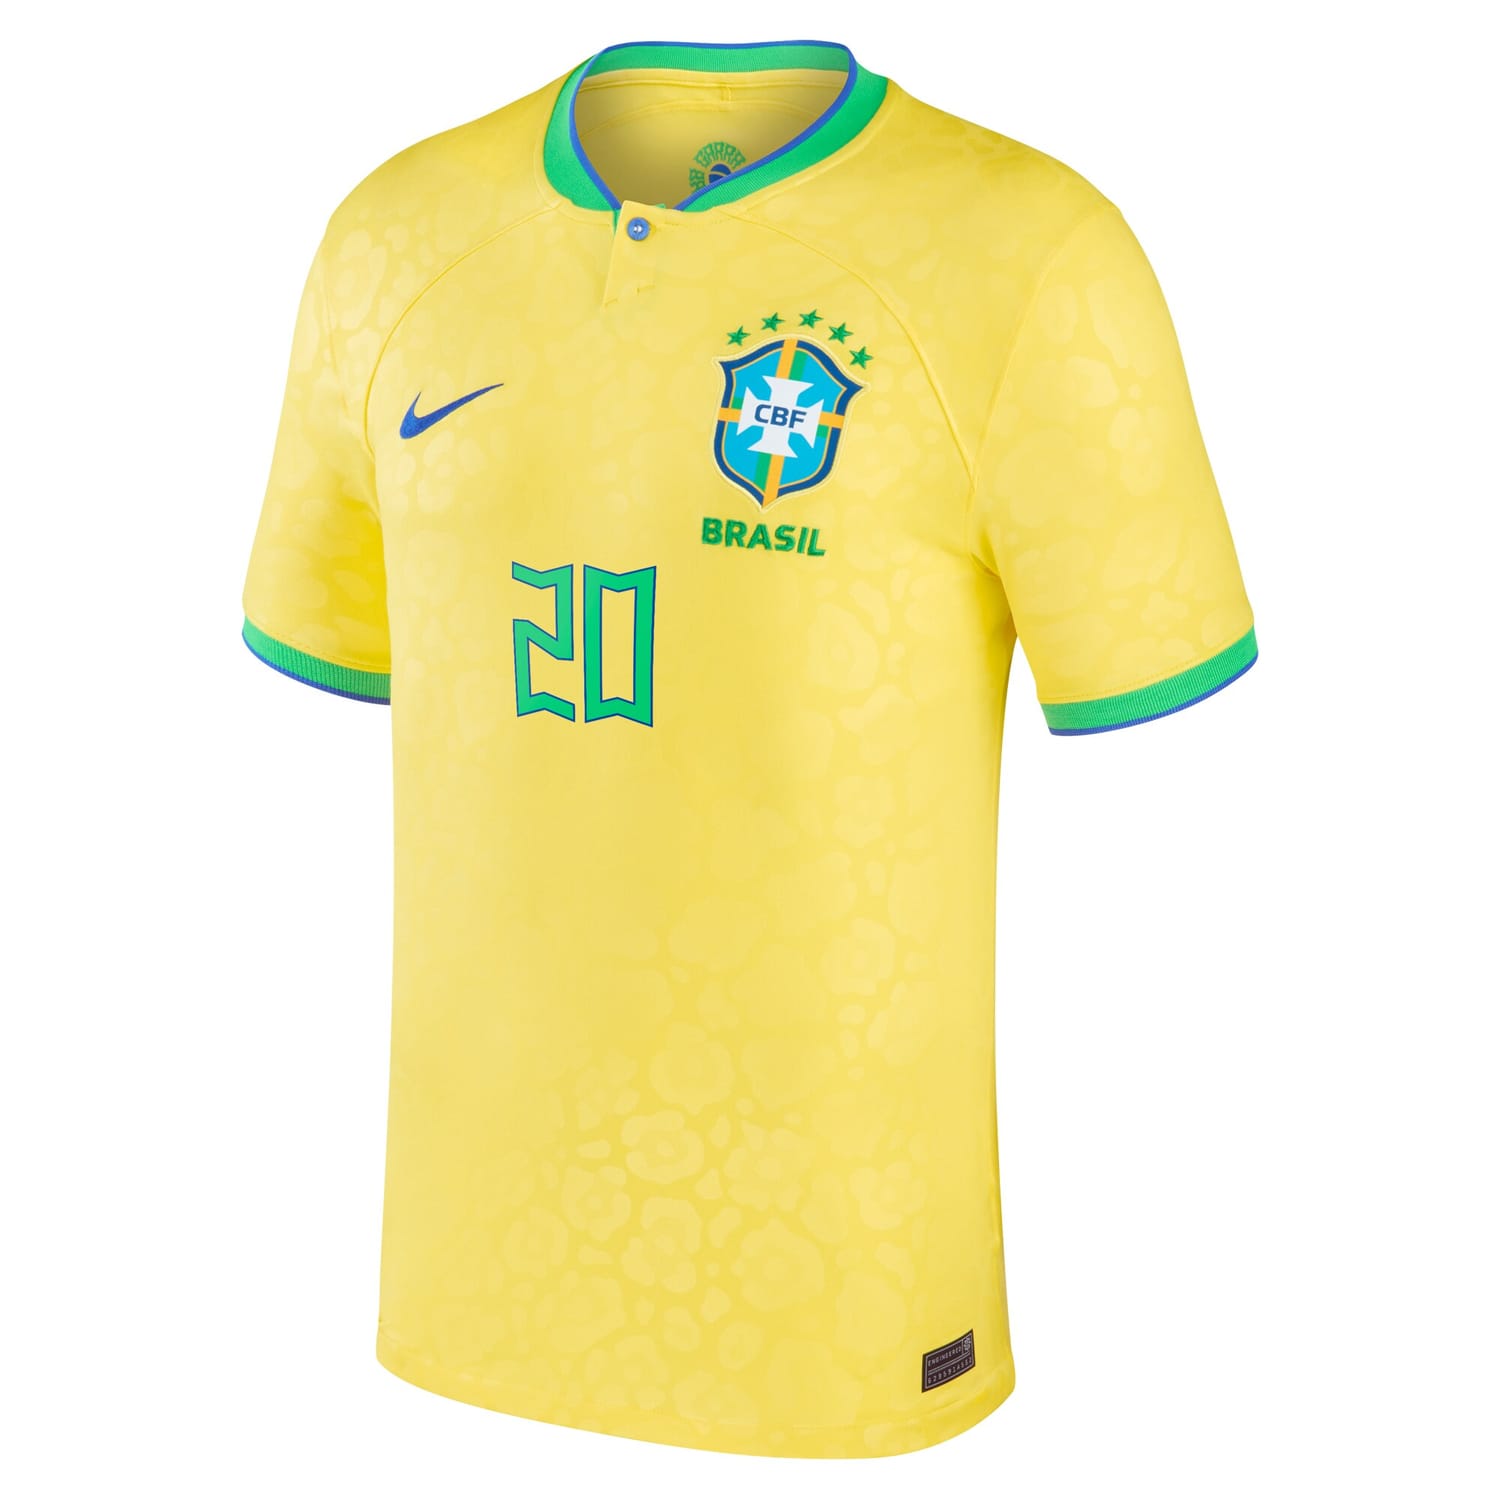 Brazil National Team Home Jersey Shirt Yellow 2022-23 player Vinicius Junior printing for Men